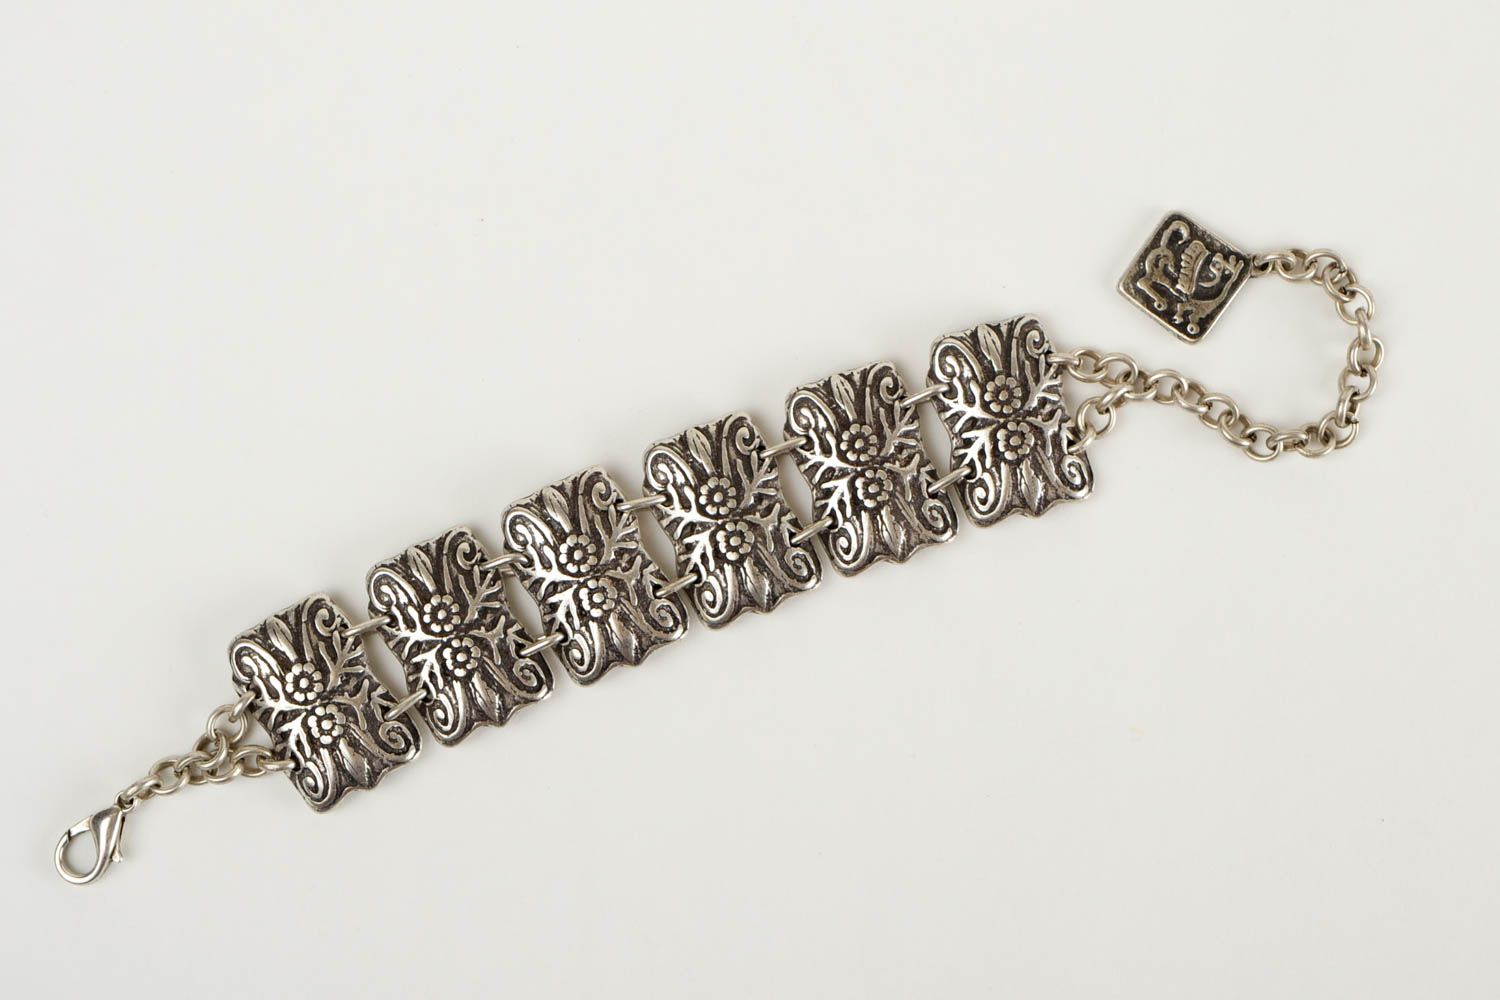 Stylish handmade metal bracelet metal craft ideas cuff bracelet designs photo 4